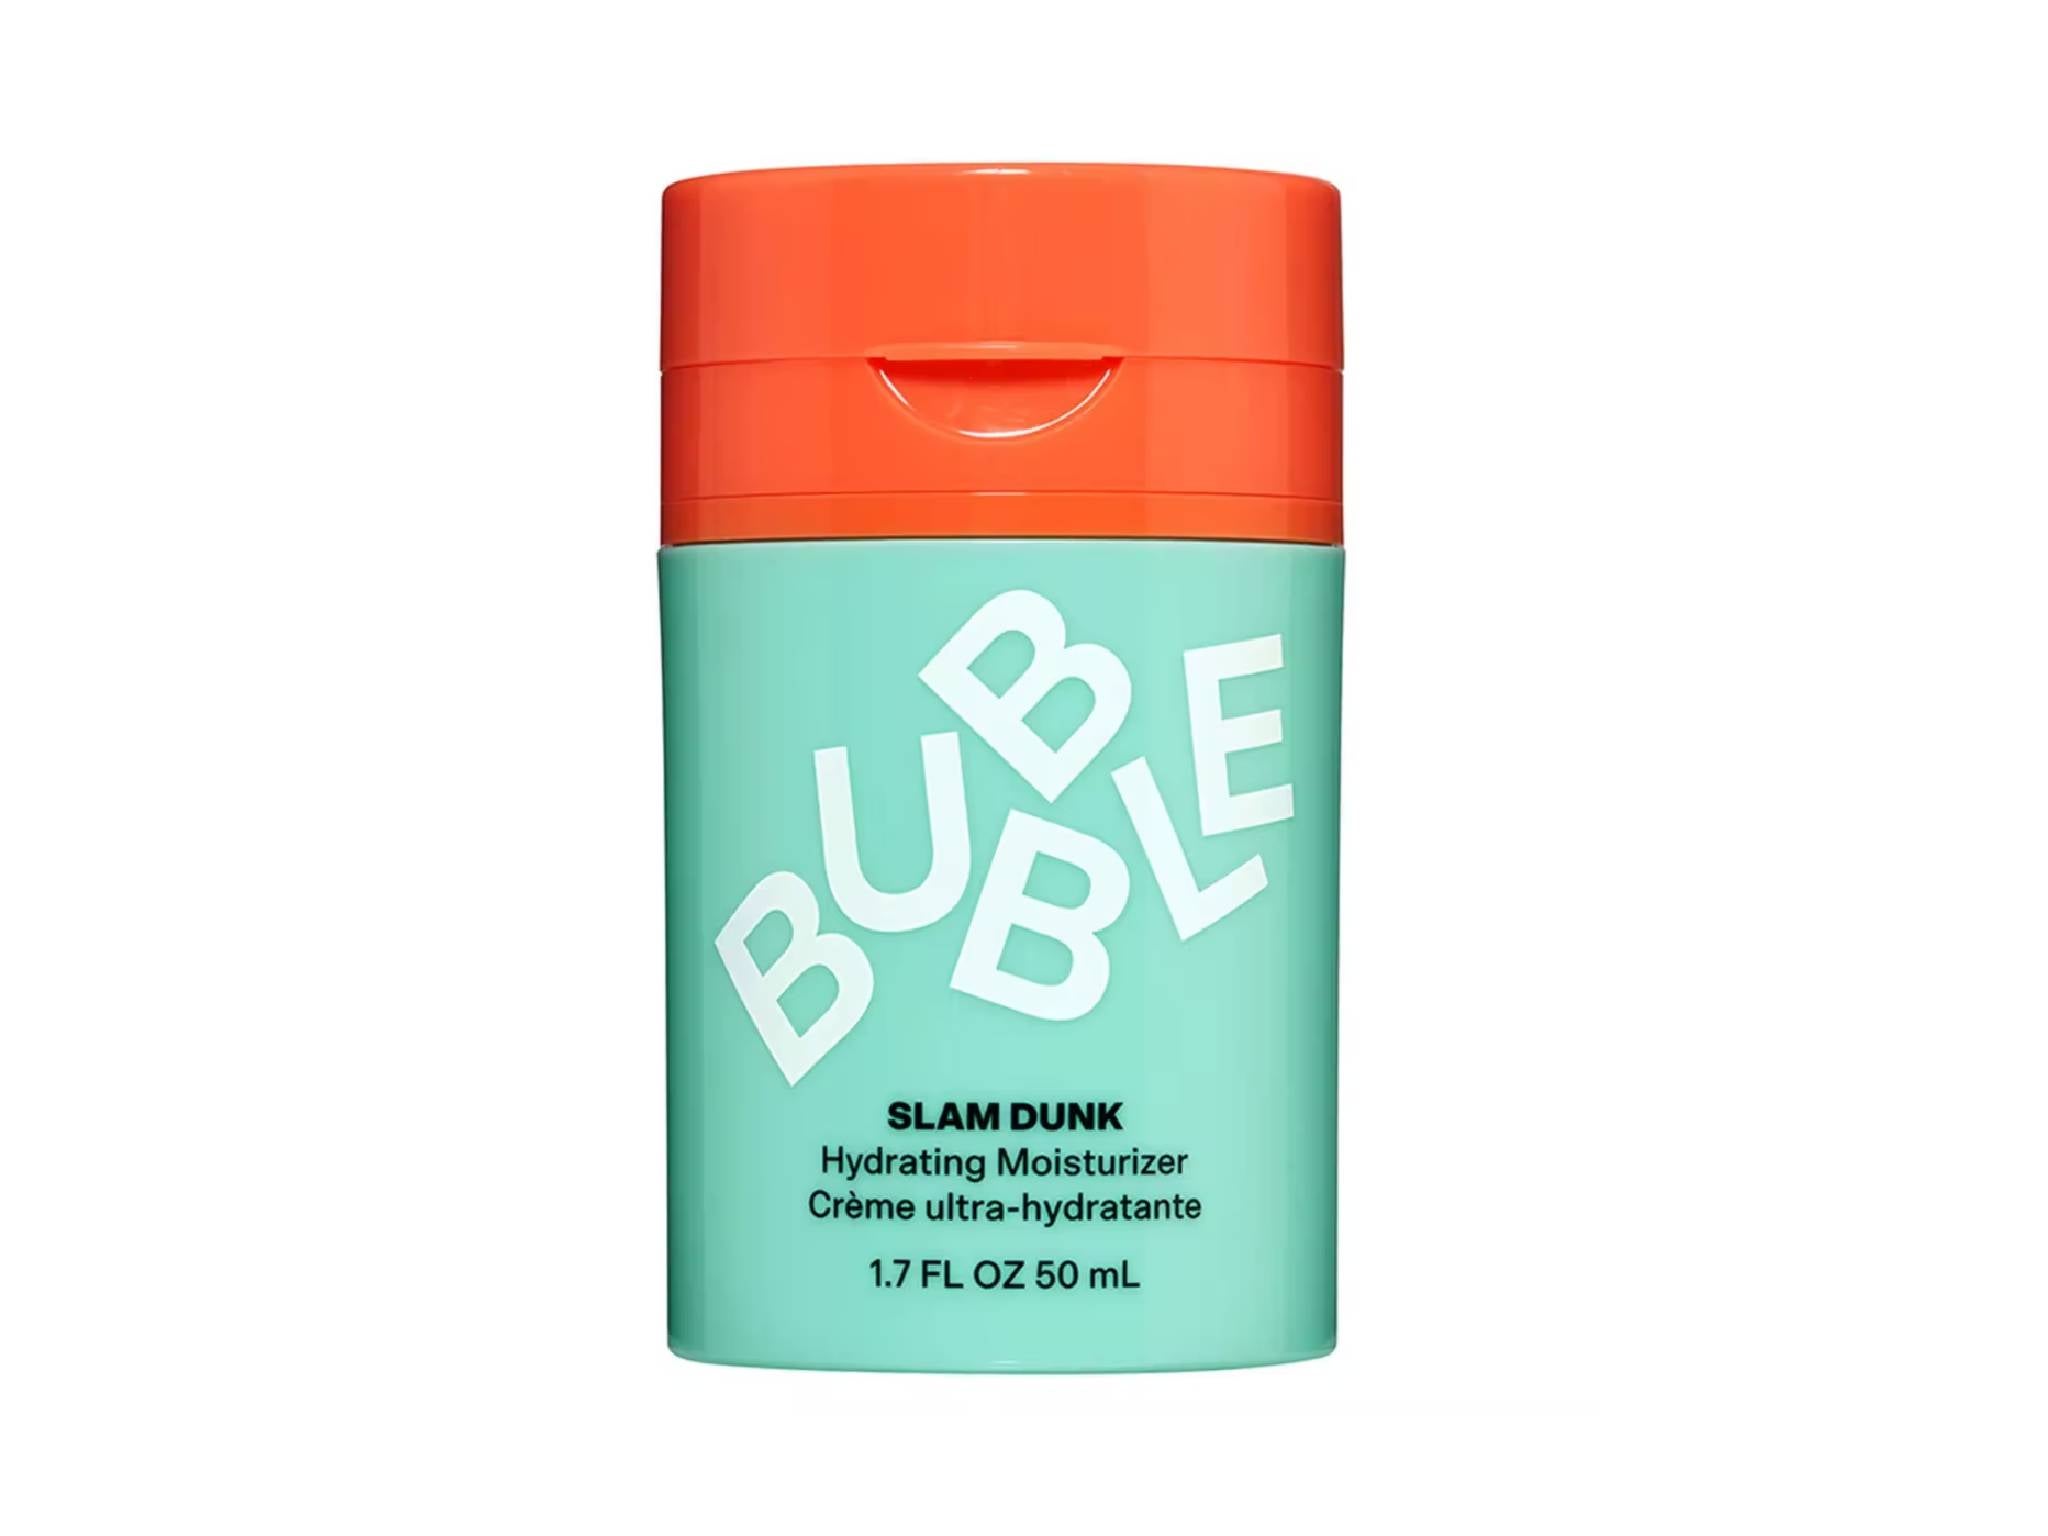 Bubble slam dunk hydrating moisturiser